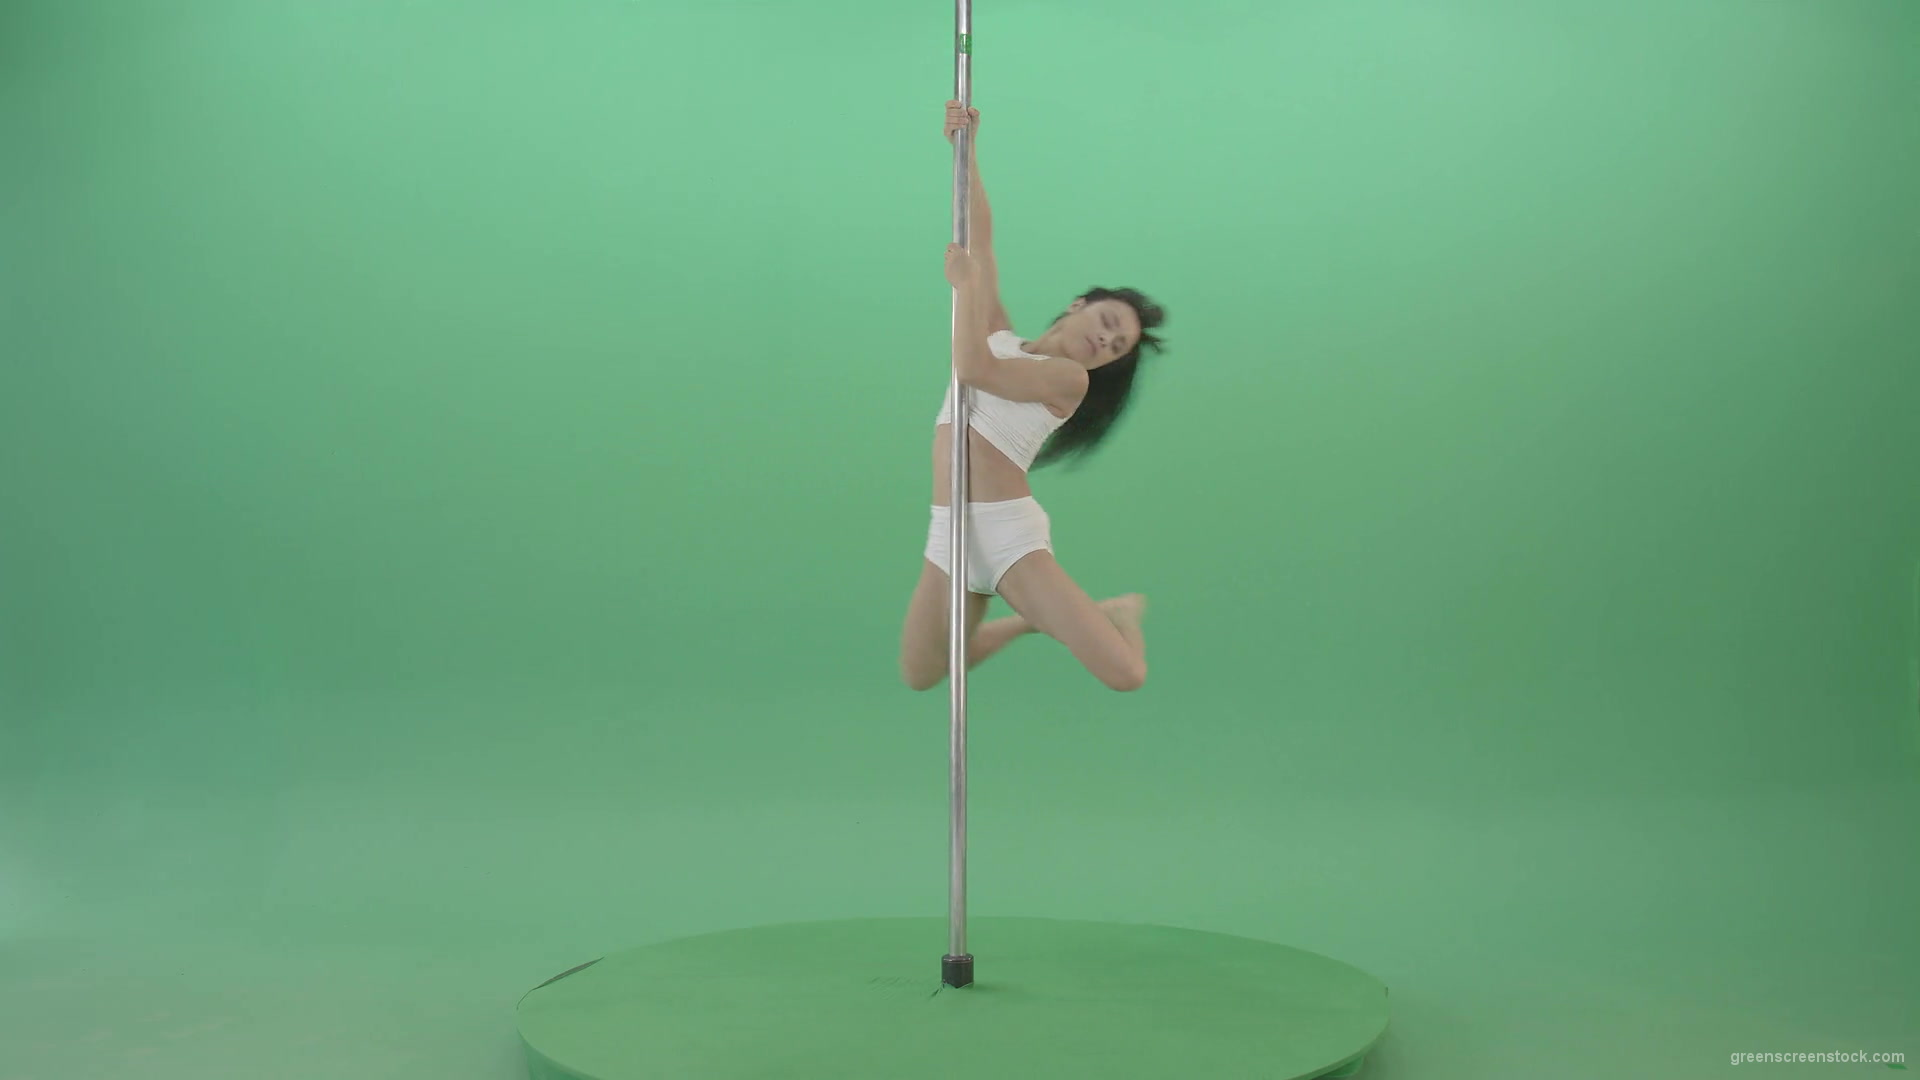 Pole-dance-trainer-girl-has-a-sport-flight-on-green-screen-4K-Video-Footage-1920_005 Green Screen Stock